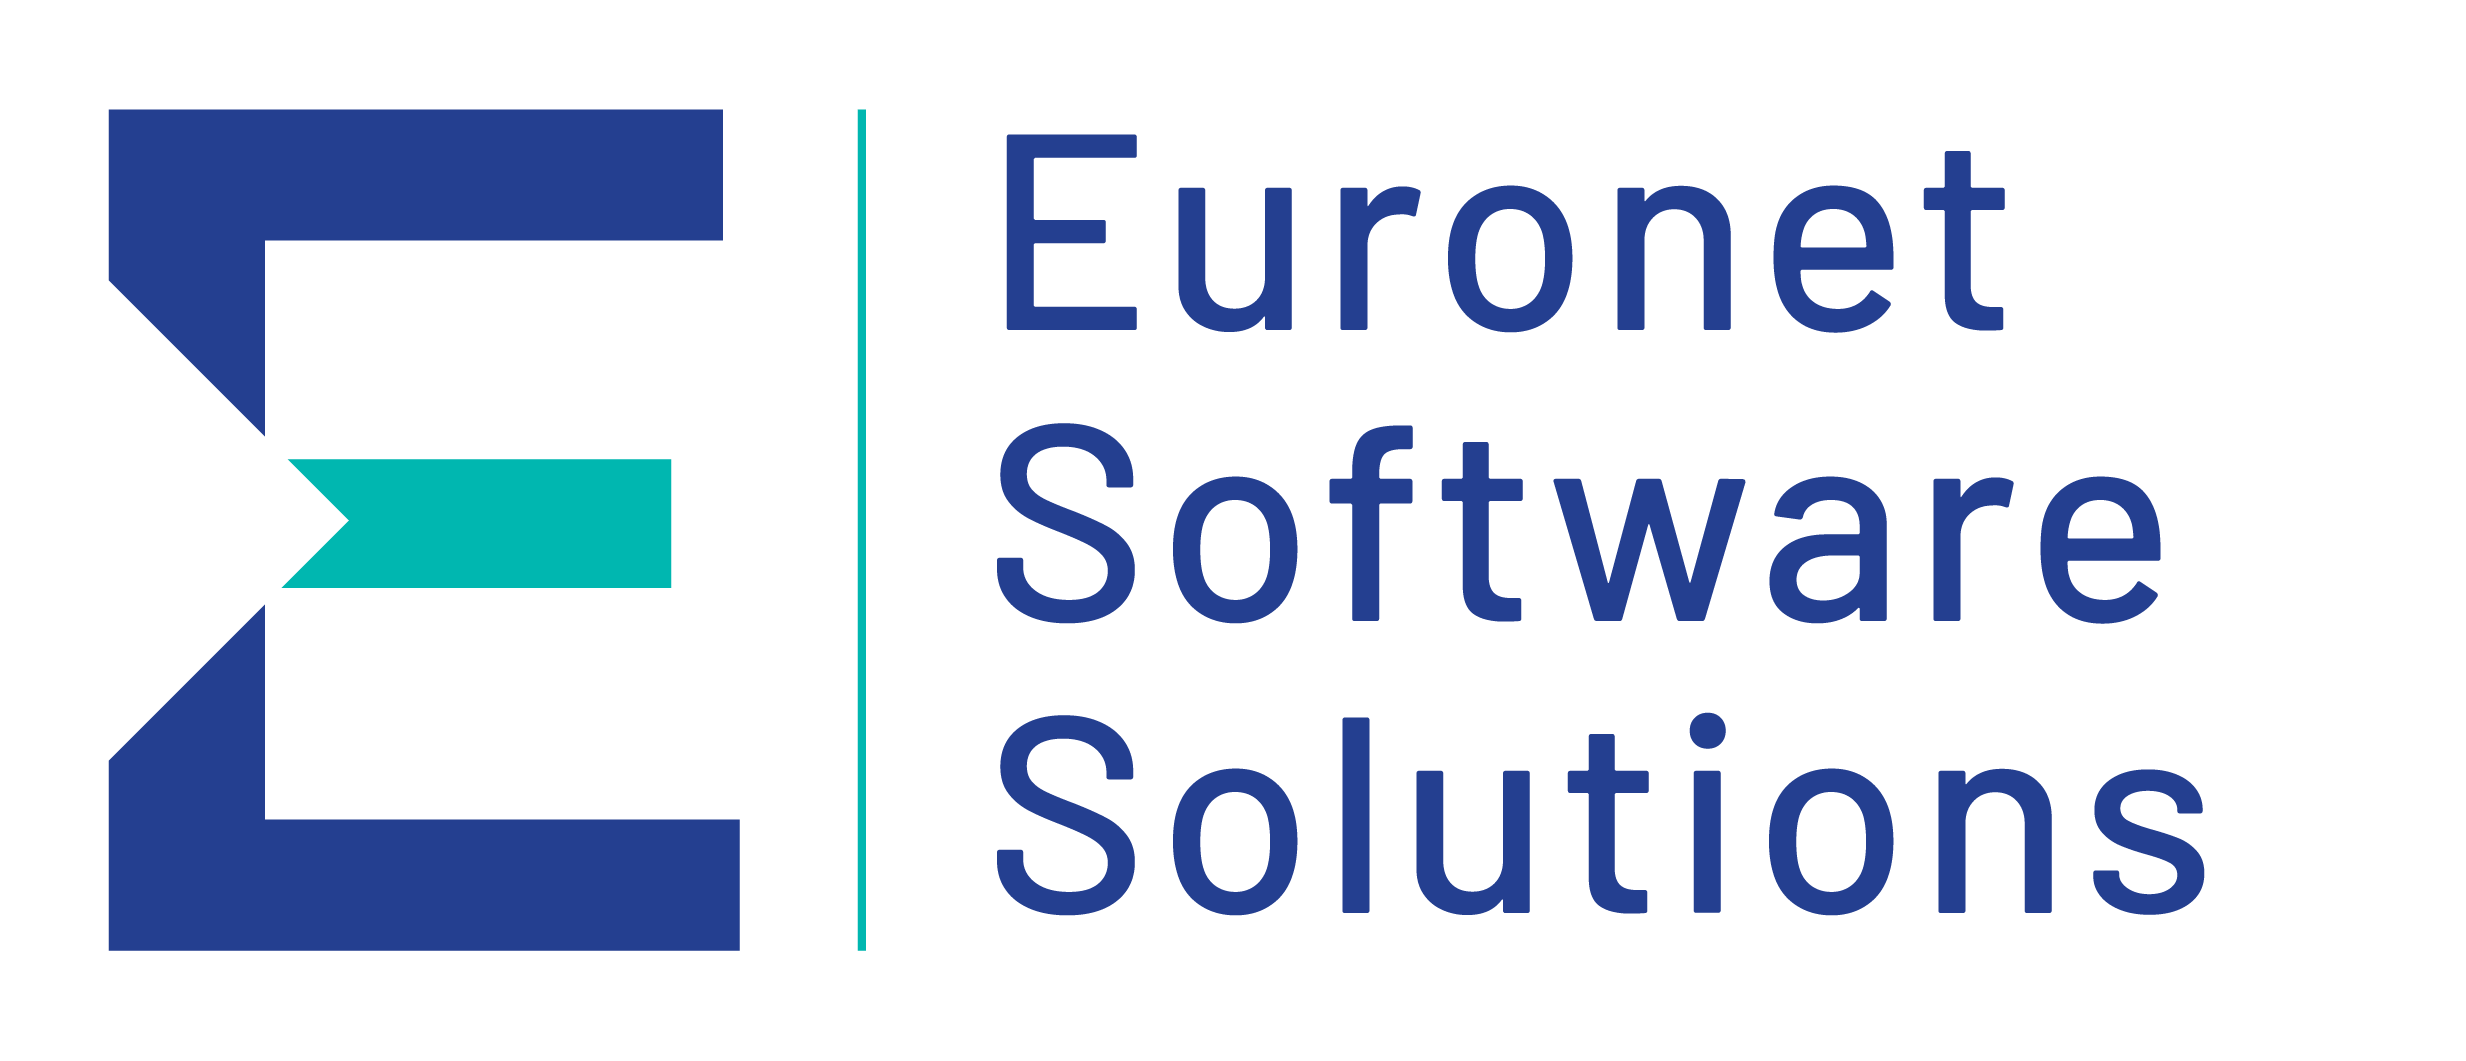 Euronet Software Solutions logo